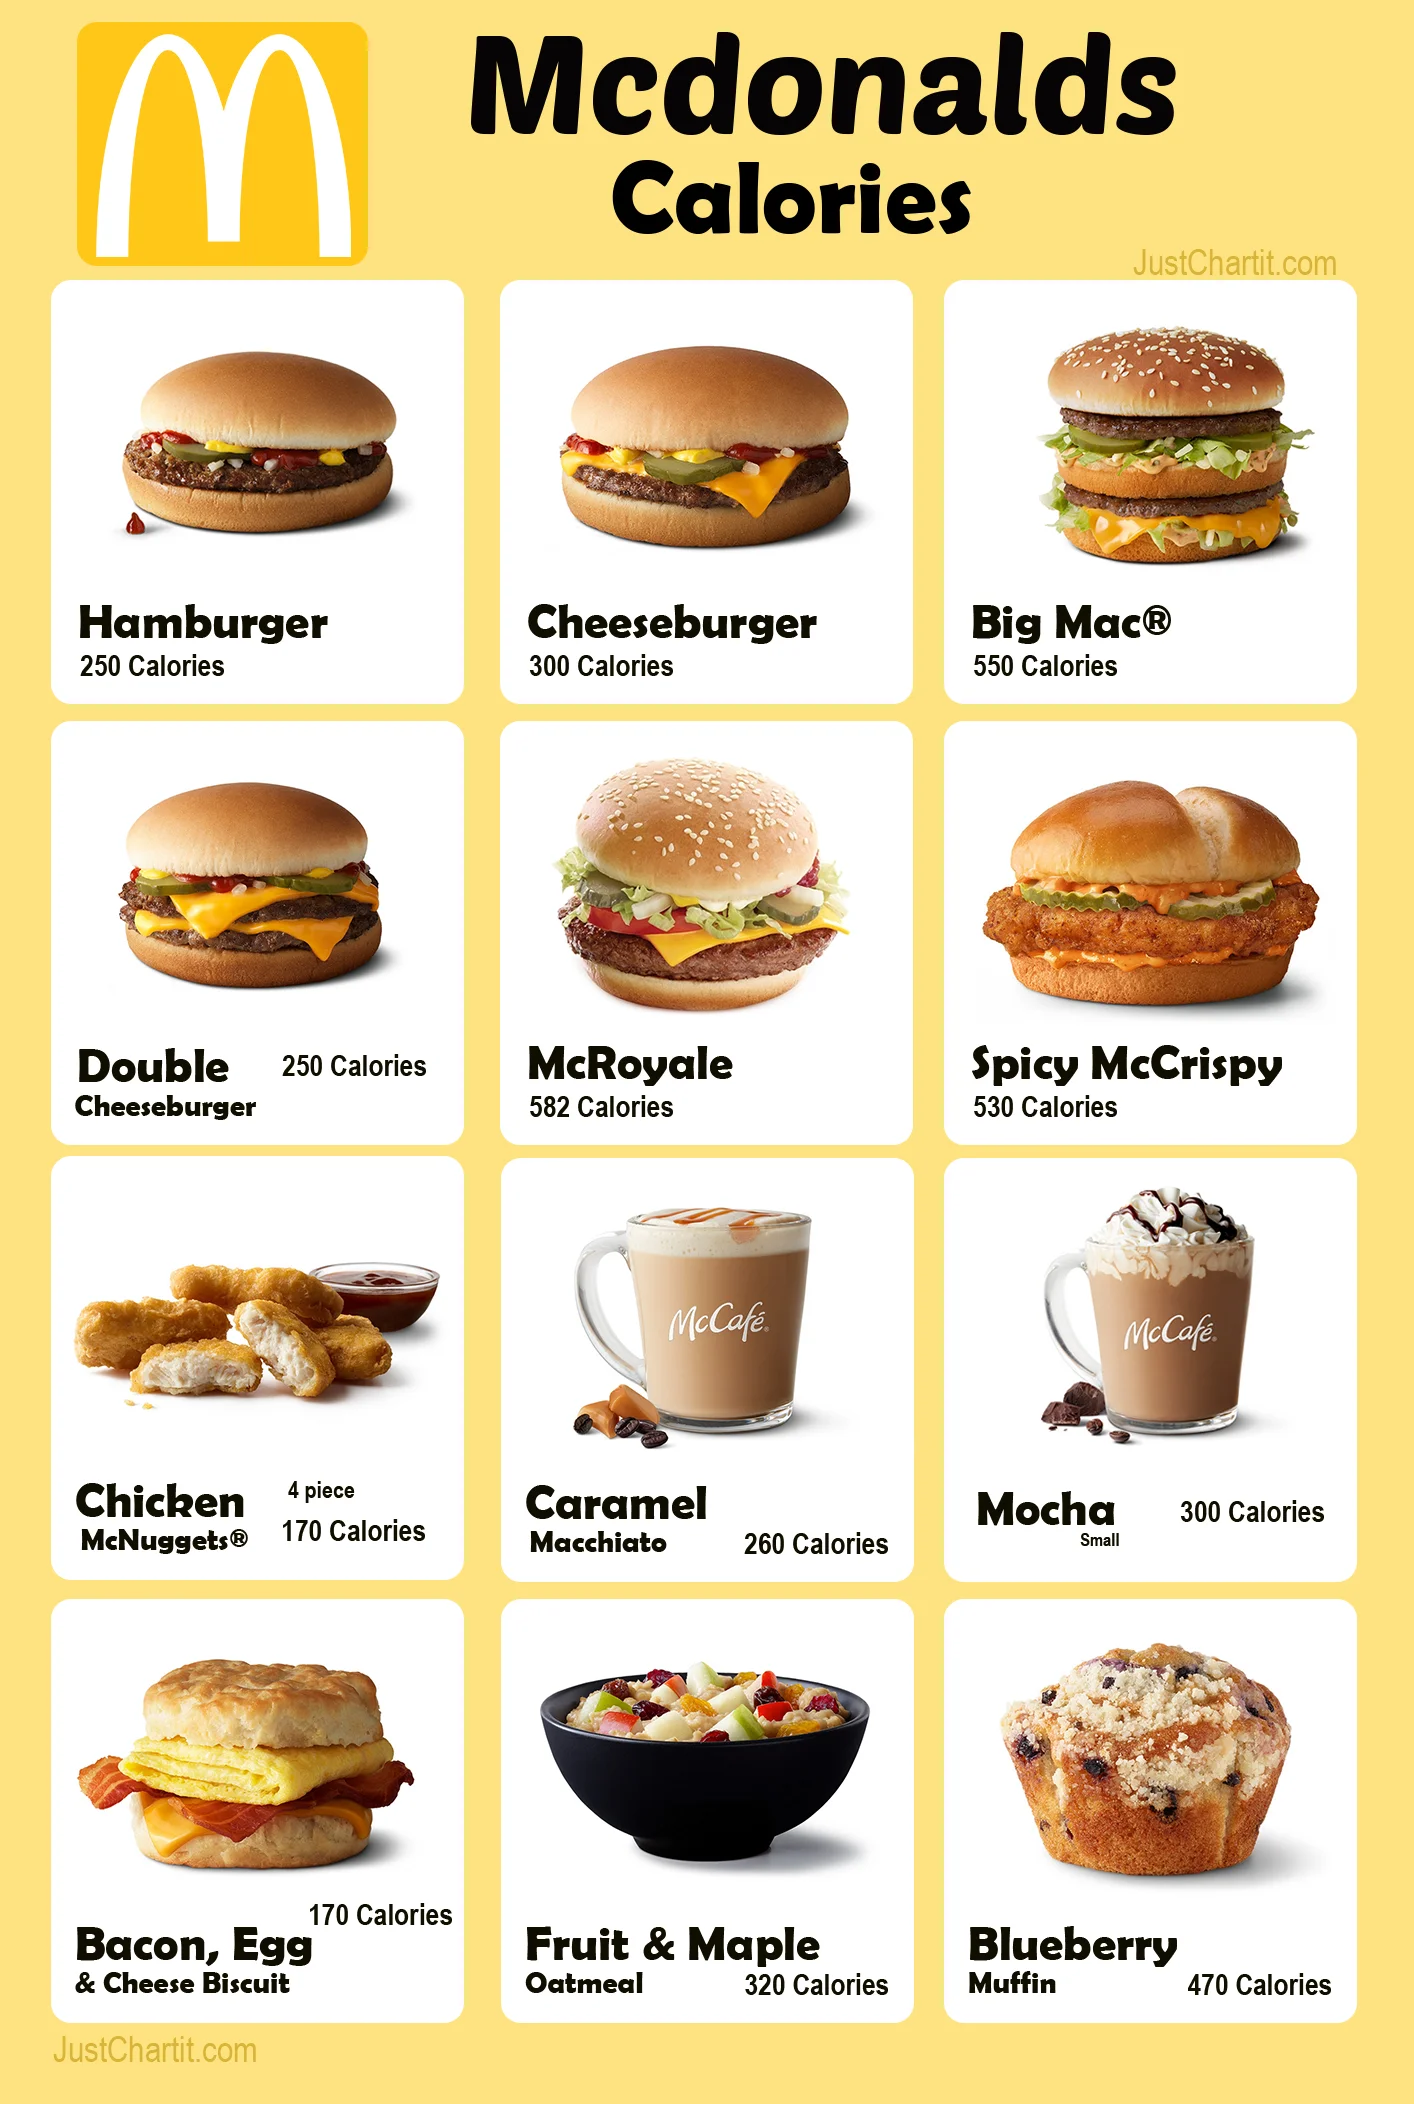 mcdonalds-calories-chart